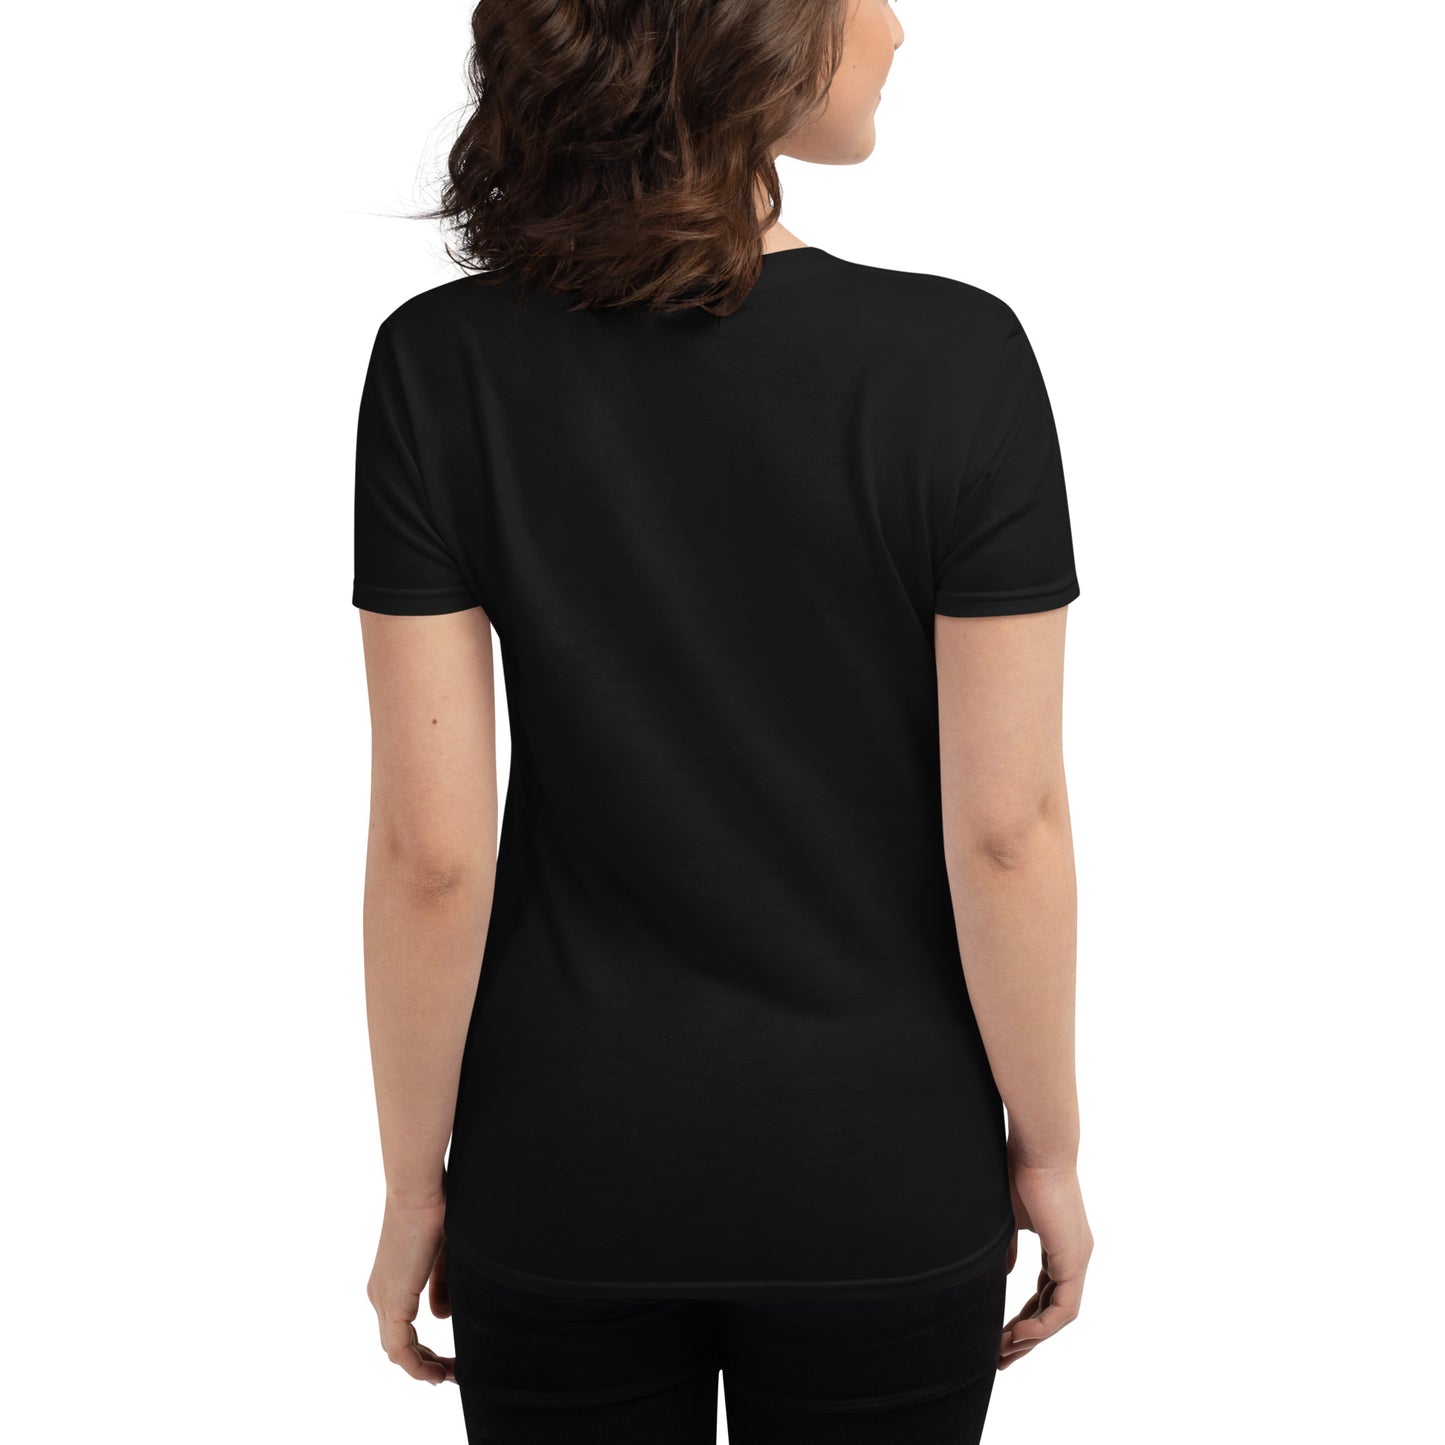 Train Your Brain Women's Short Sleeve t-shirt